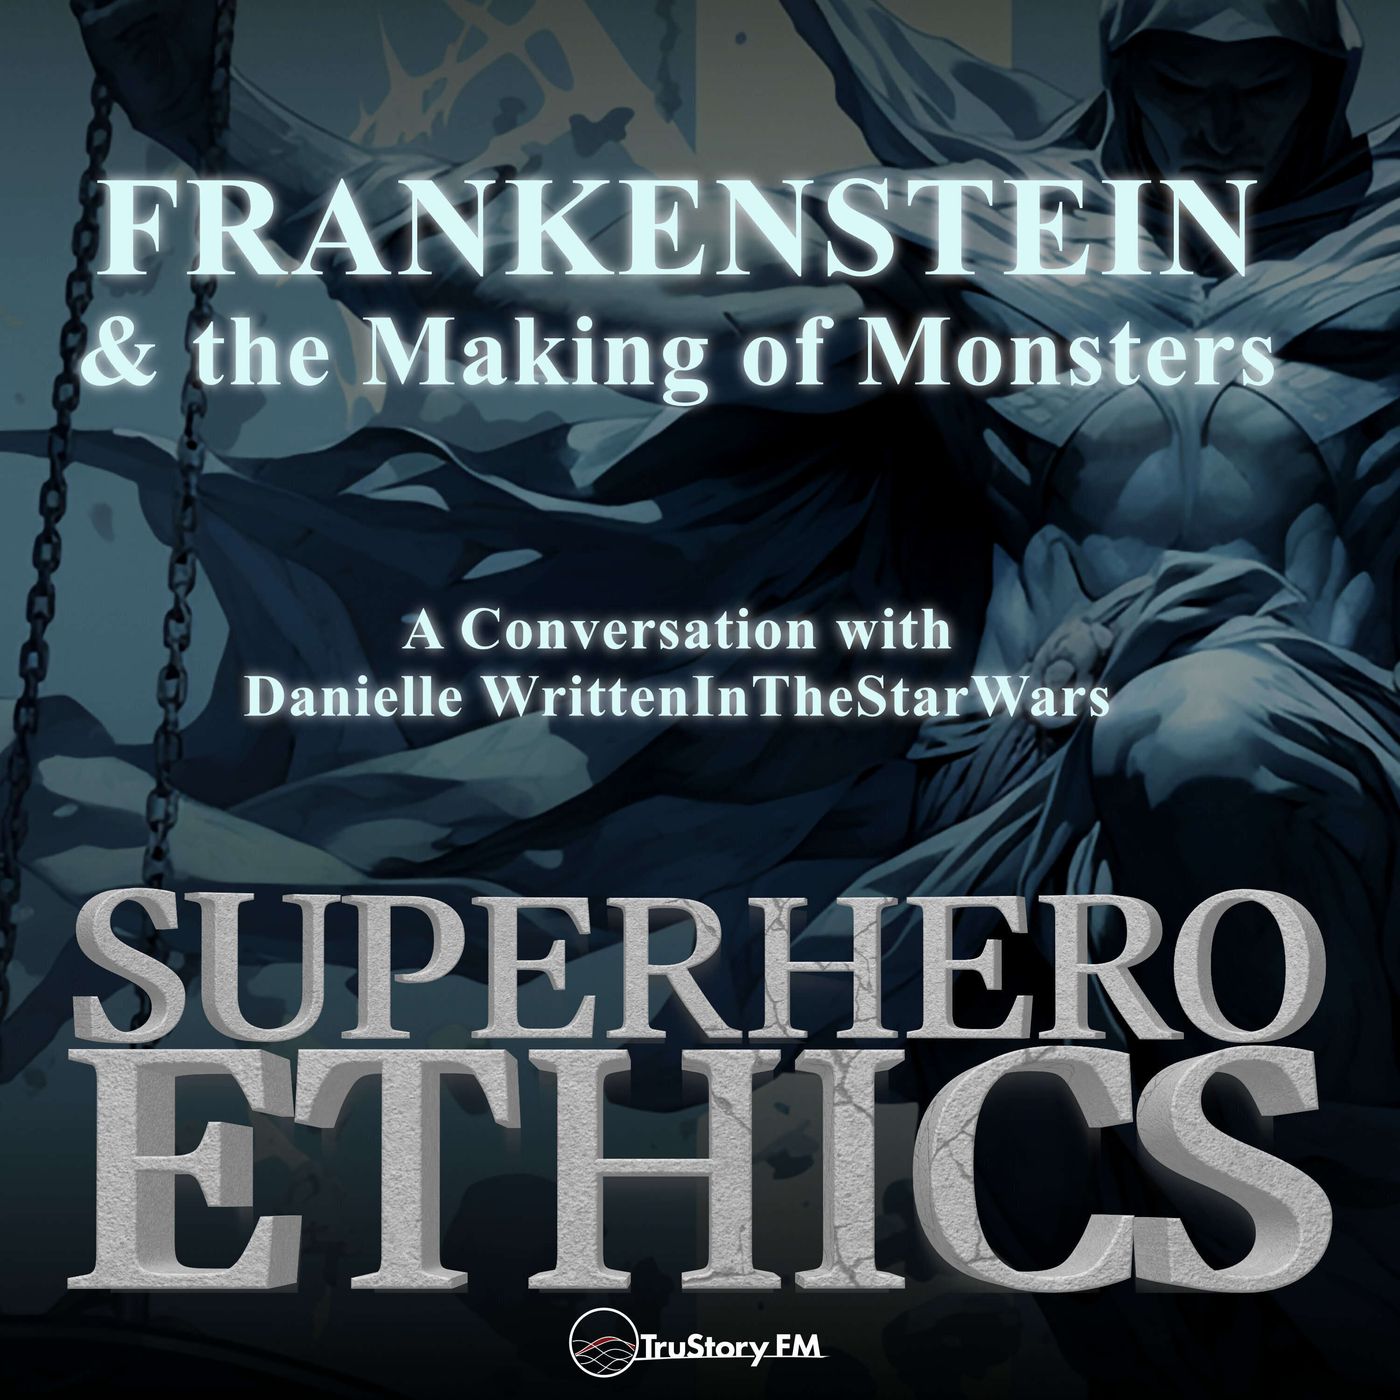 Frankenstein & the Making of Monsters